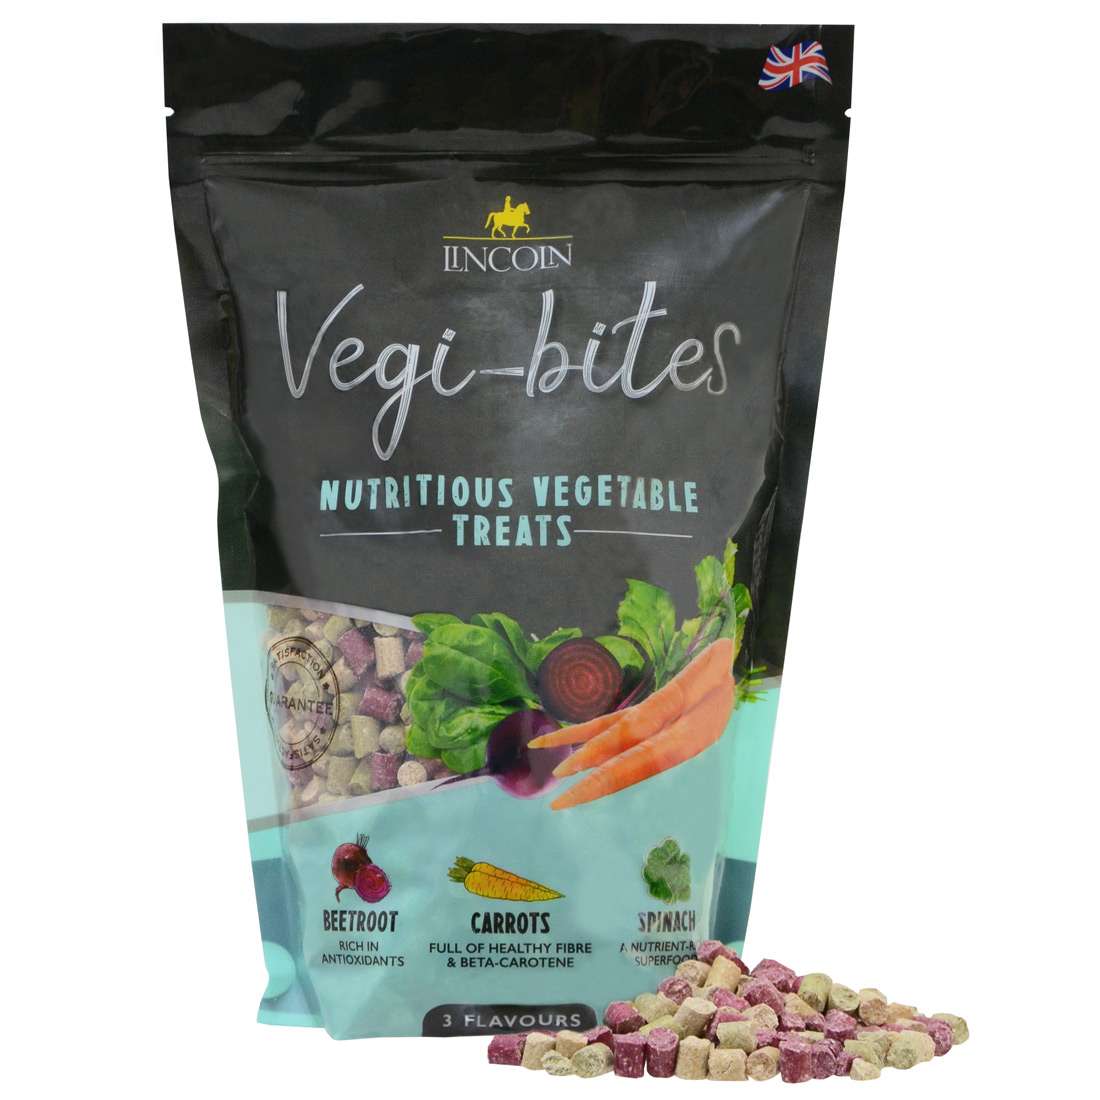 Lincoln Veg-Bites nutritious vegetable treats